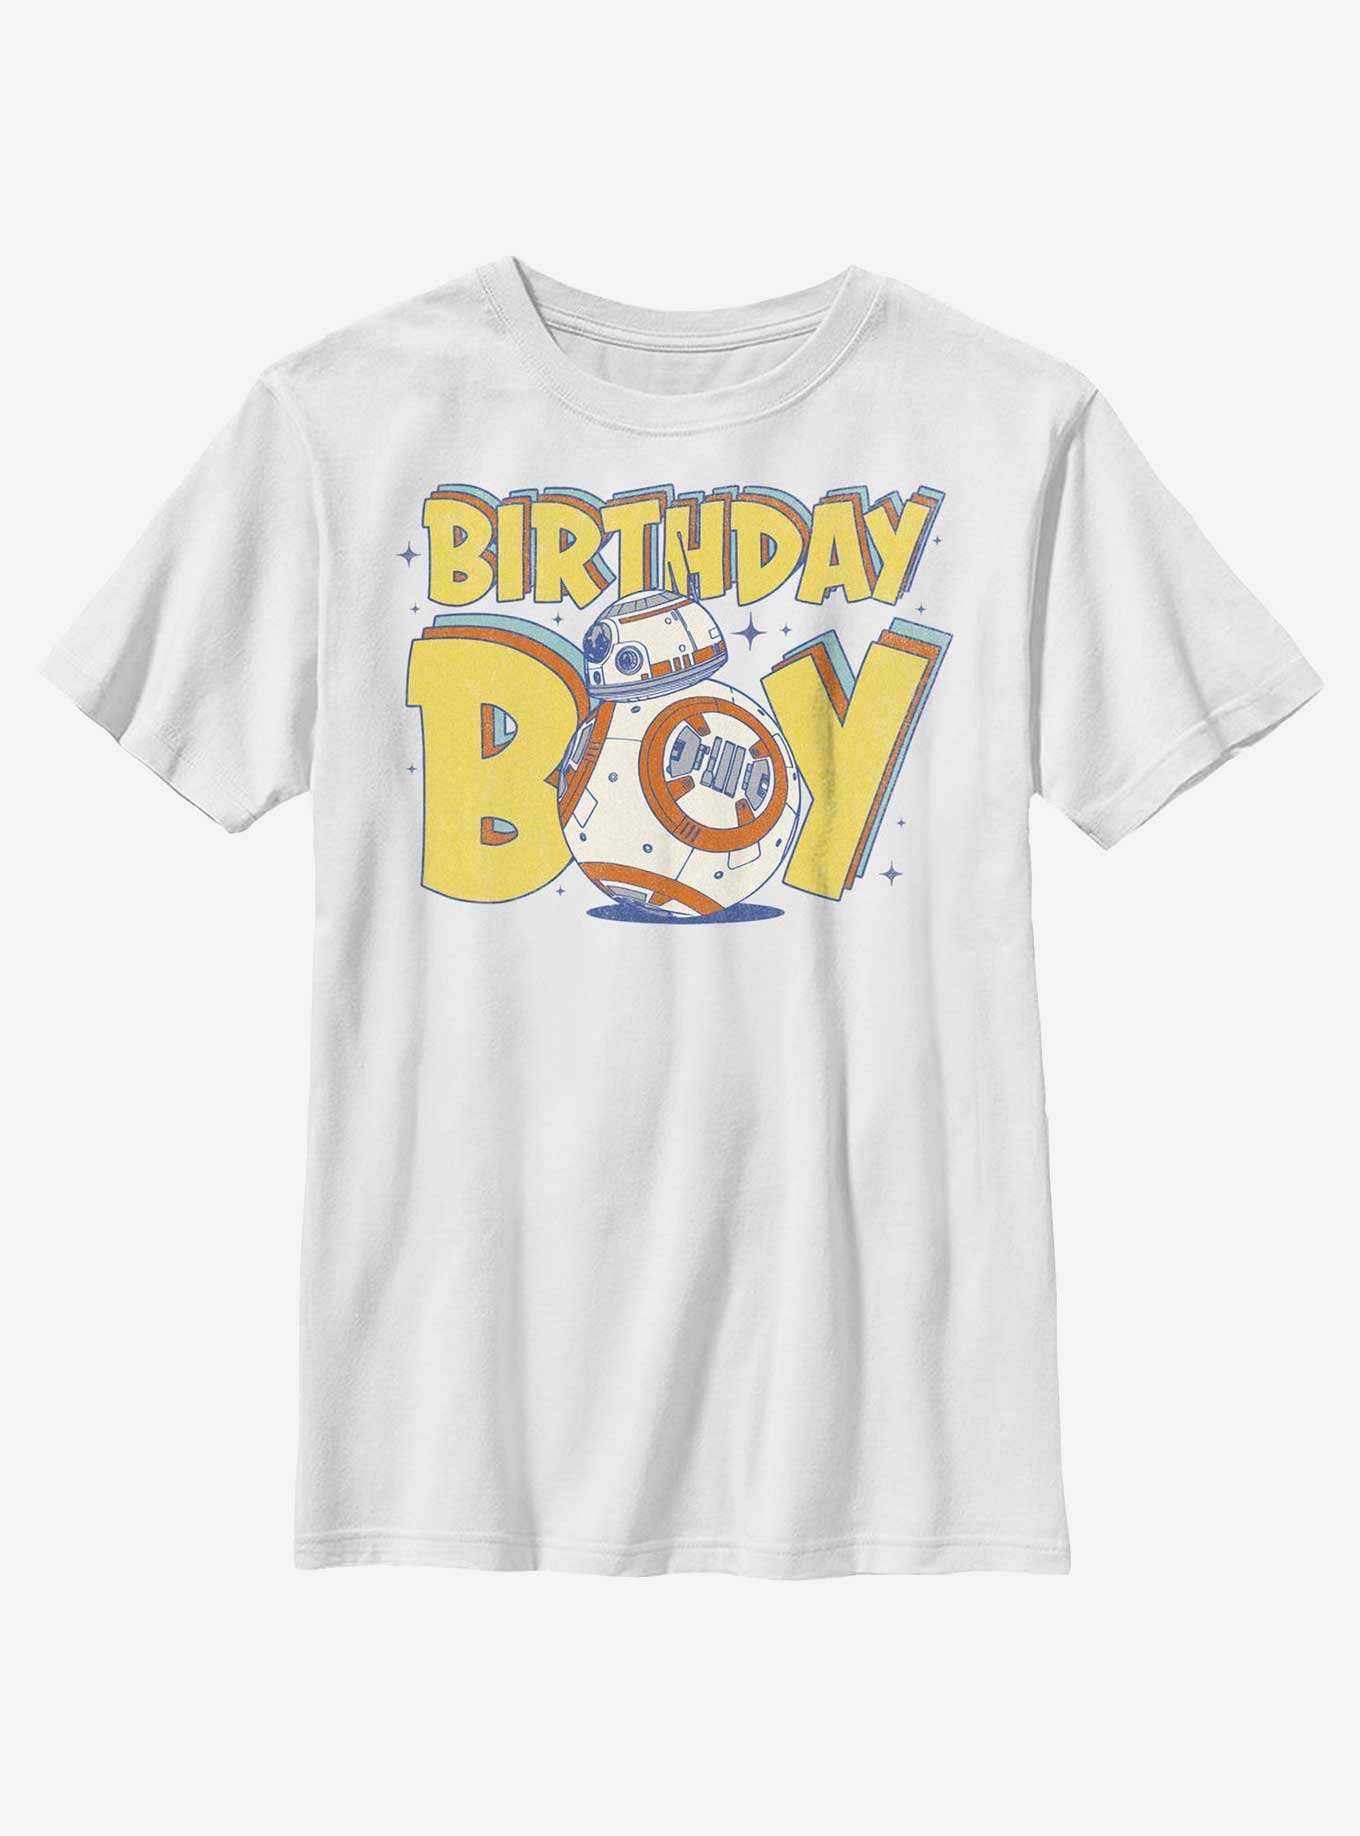 Star Wars BB8 Birthday Boy T-Shirt, , hi-res